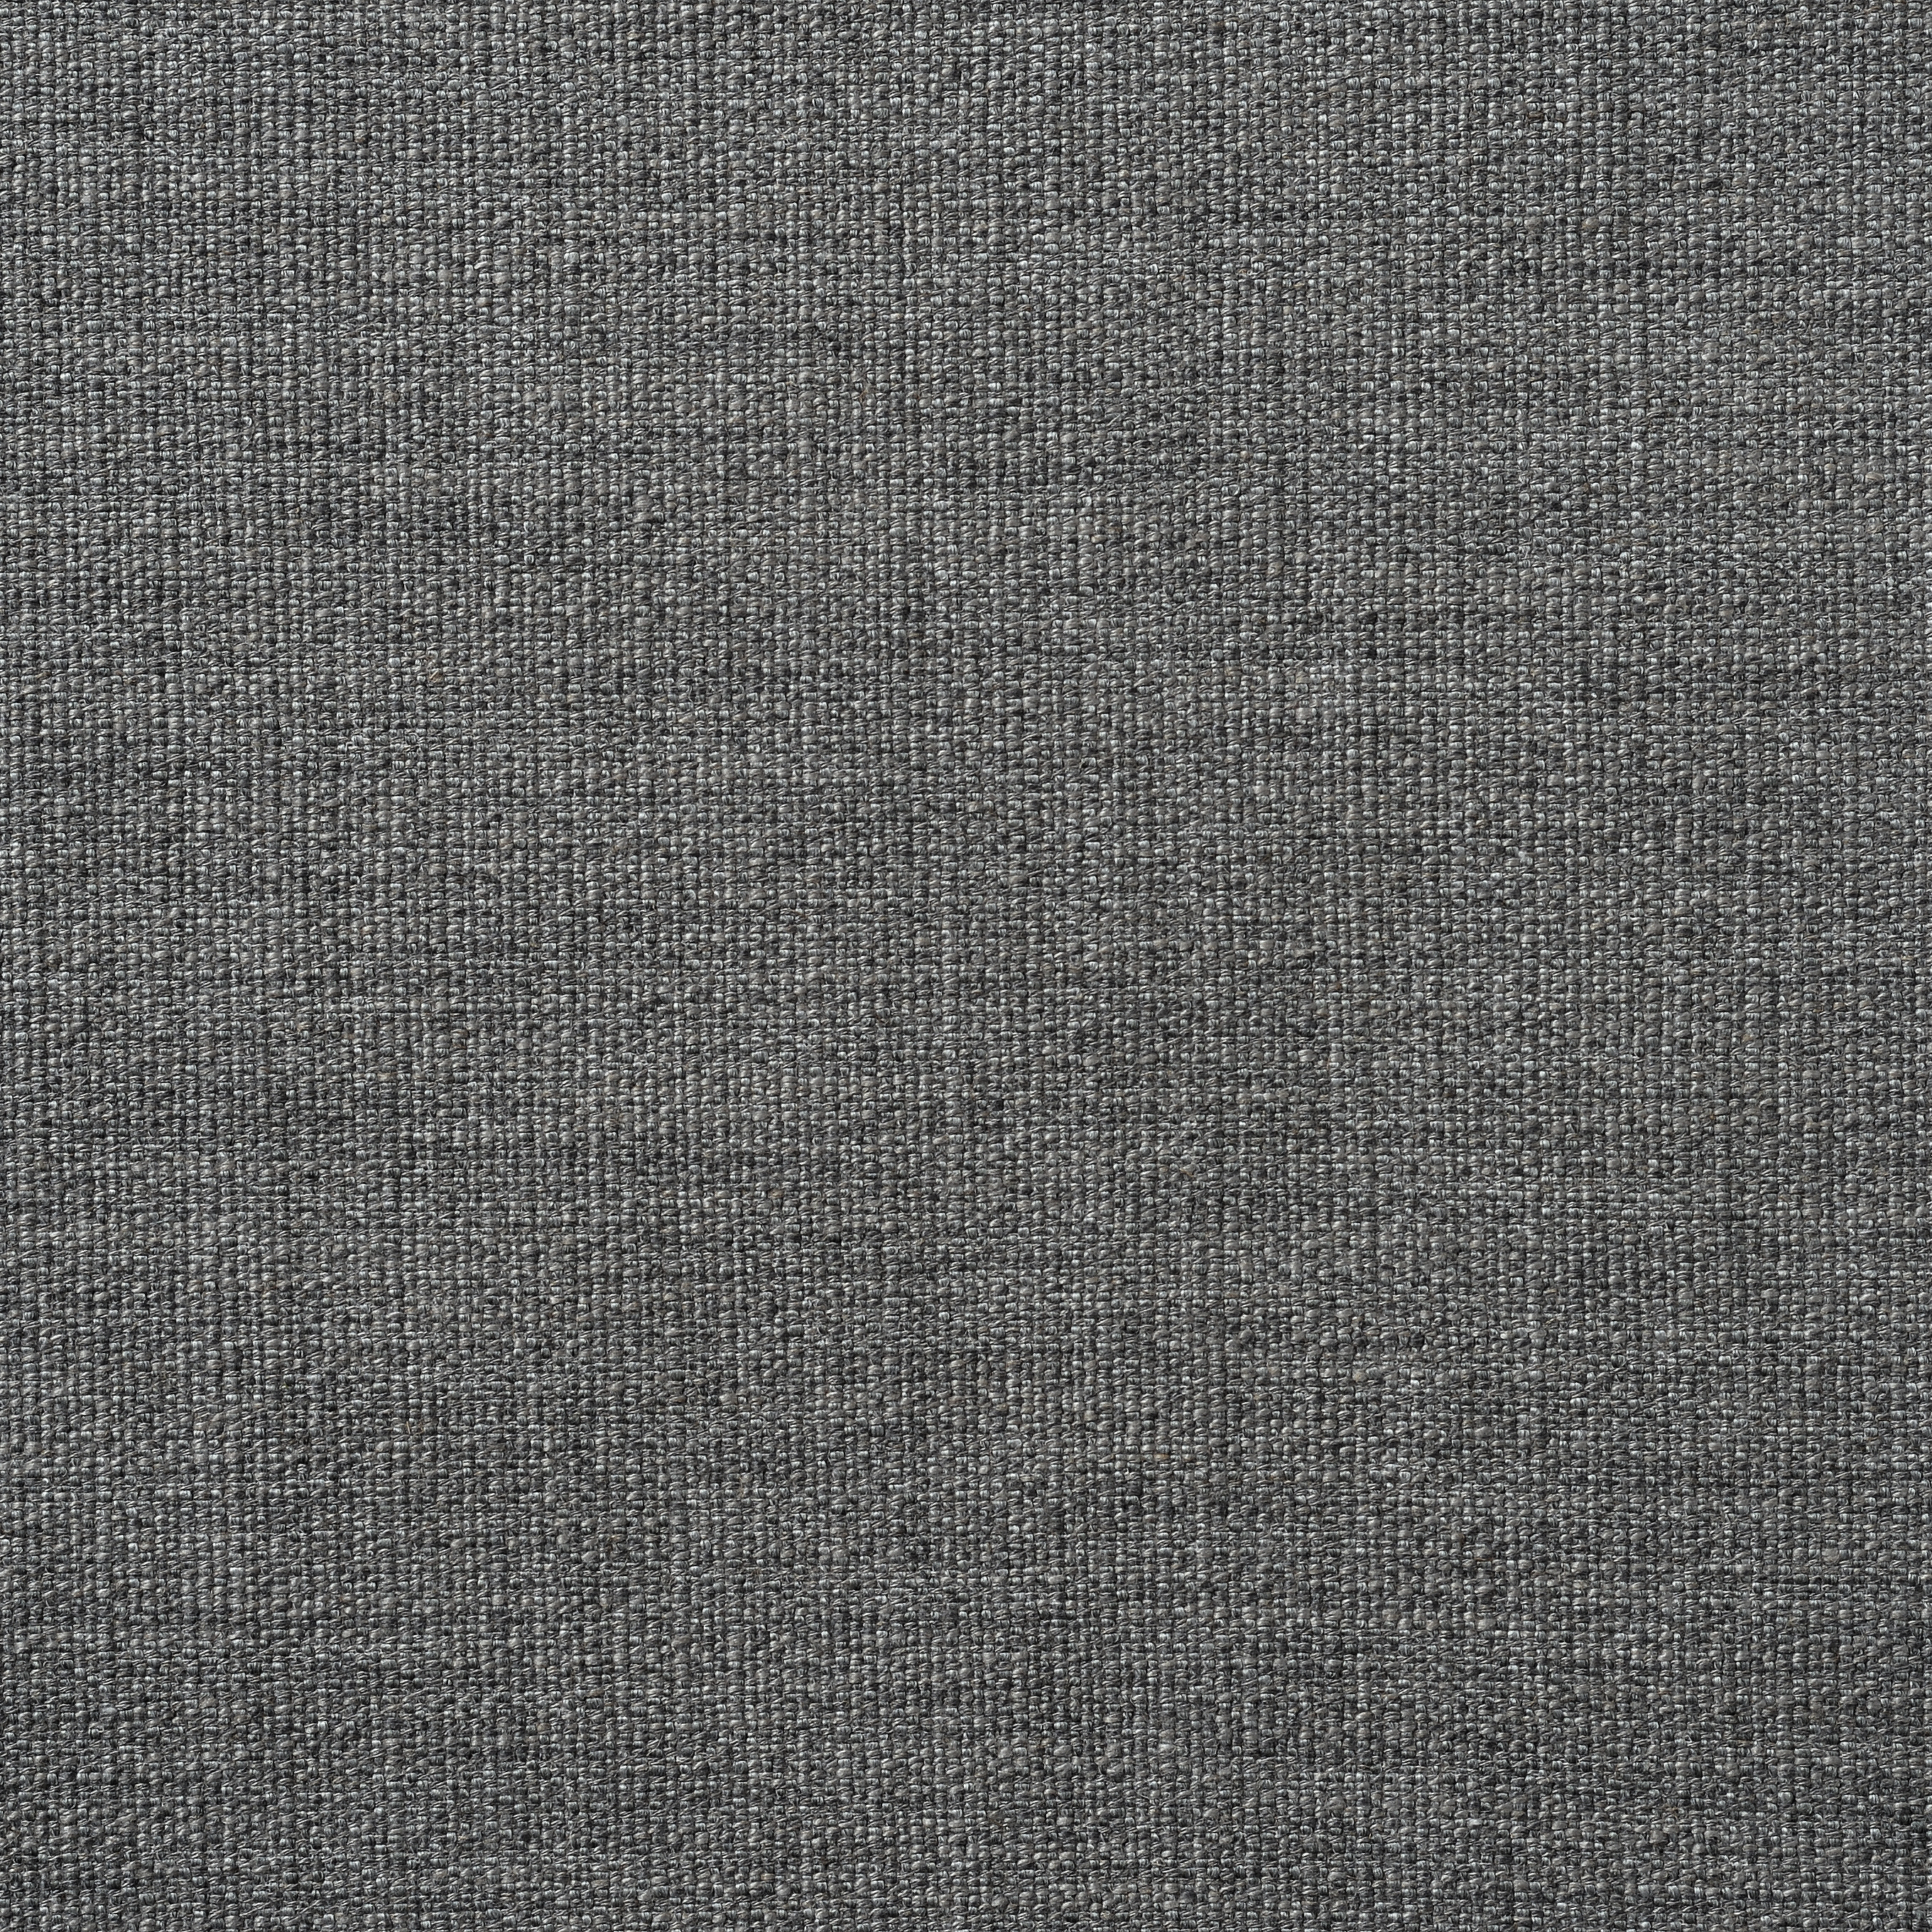 Mabel Rustic Weave - Grey Marl